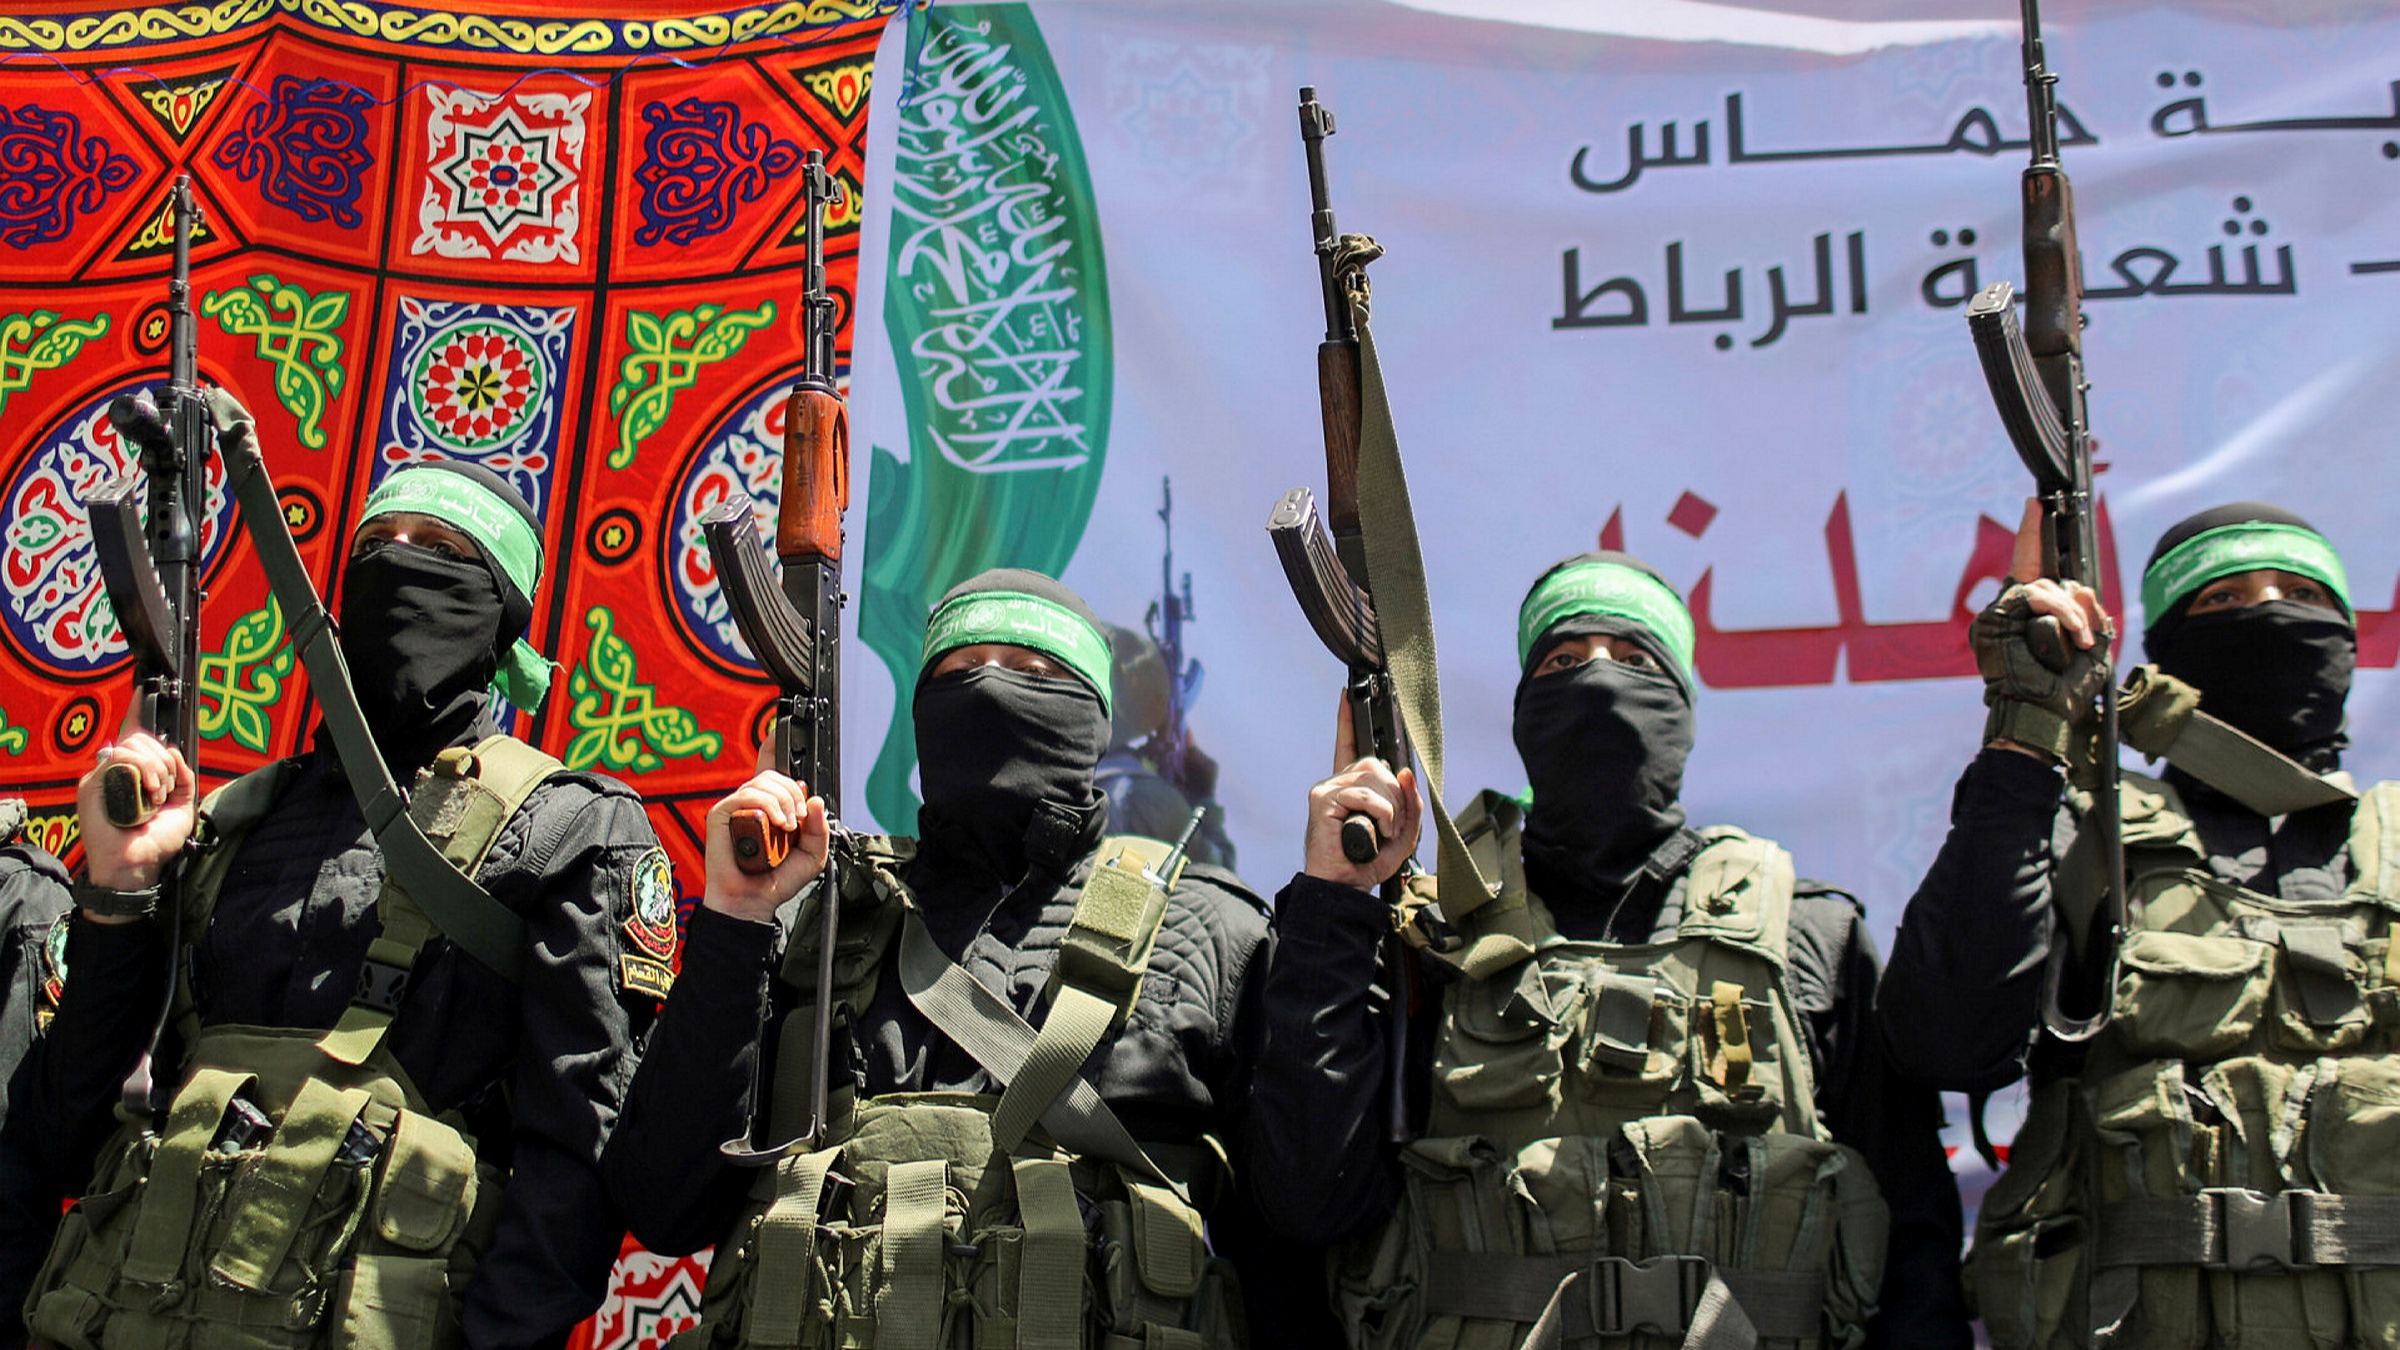 Hamas vs israel